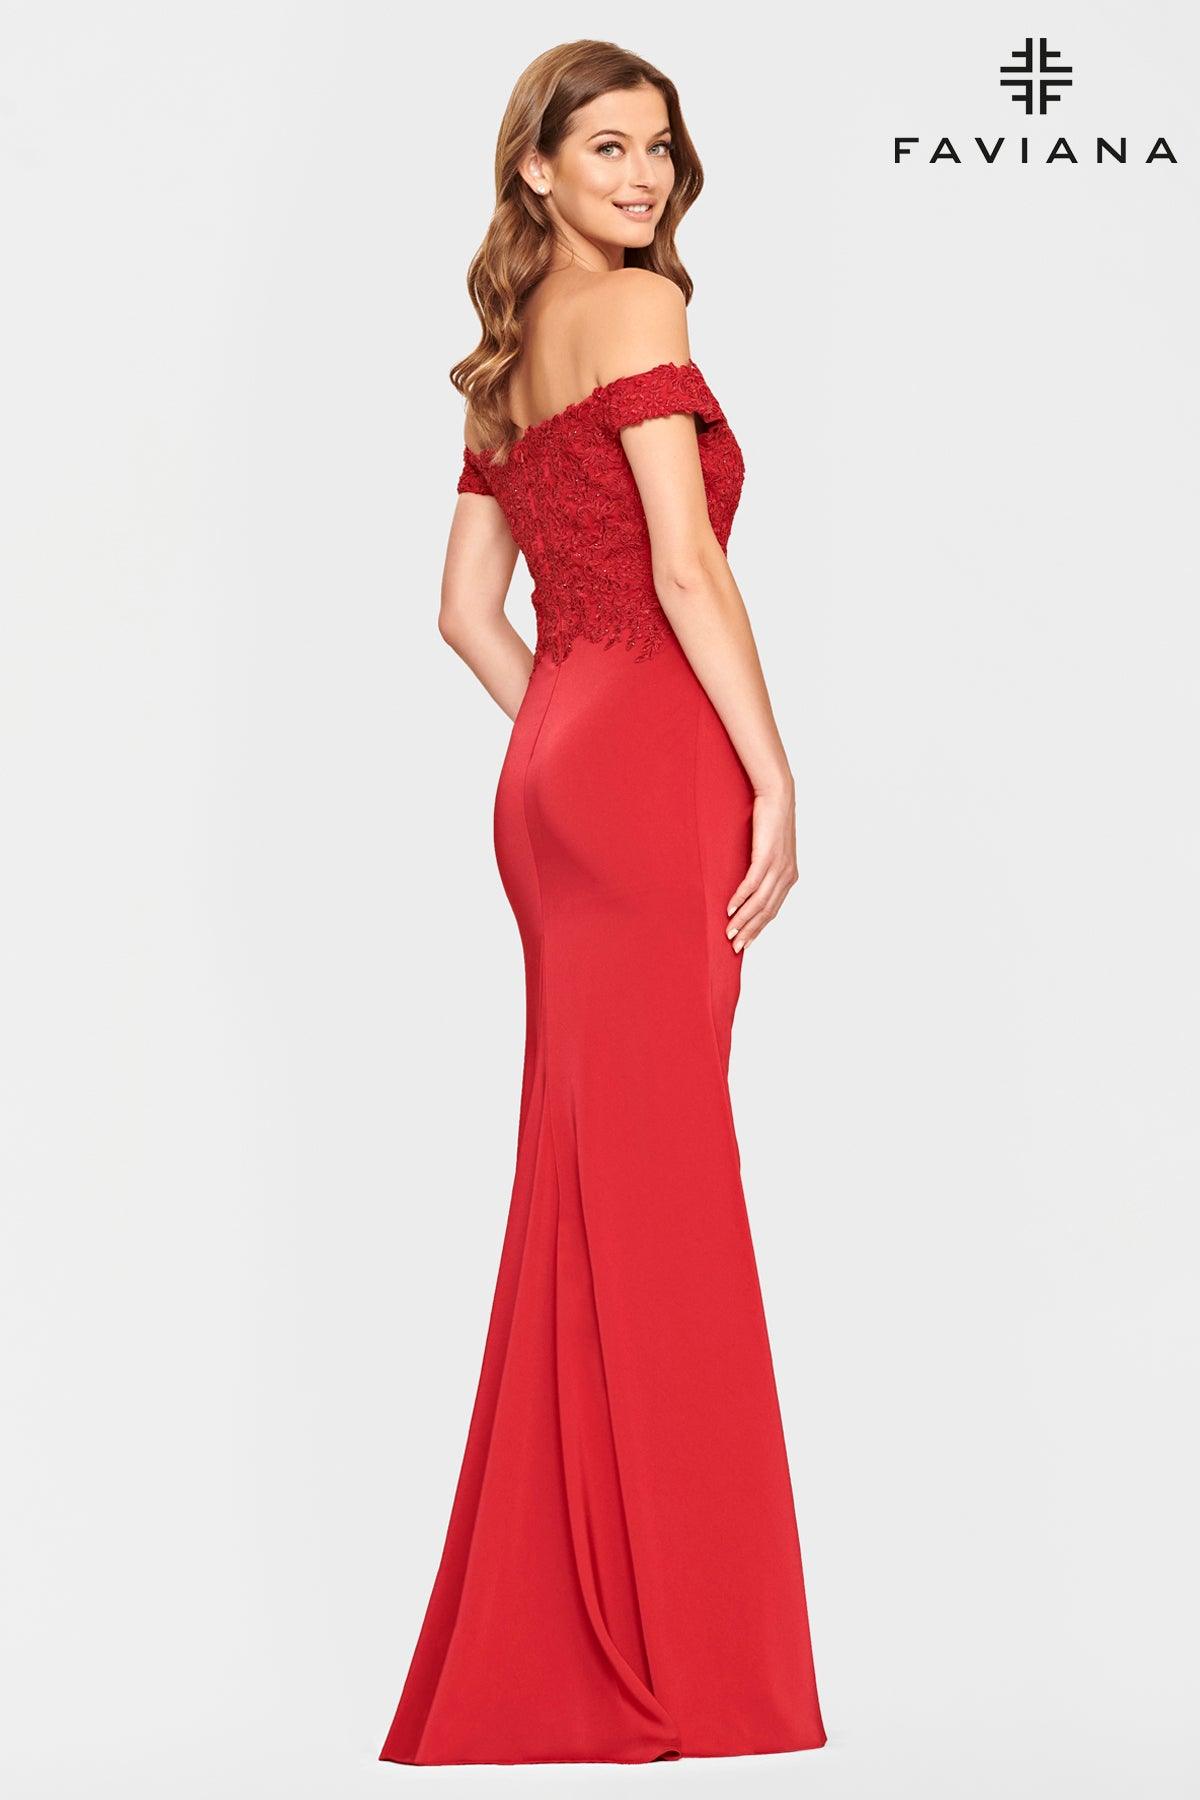 Faviana S10863 Long Off Shoulder Formal Prom Dress